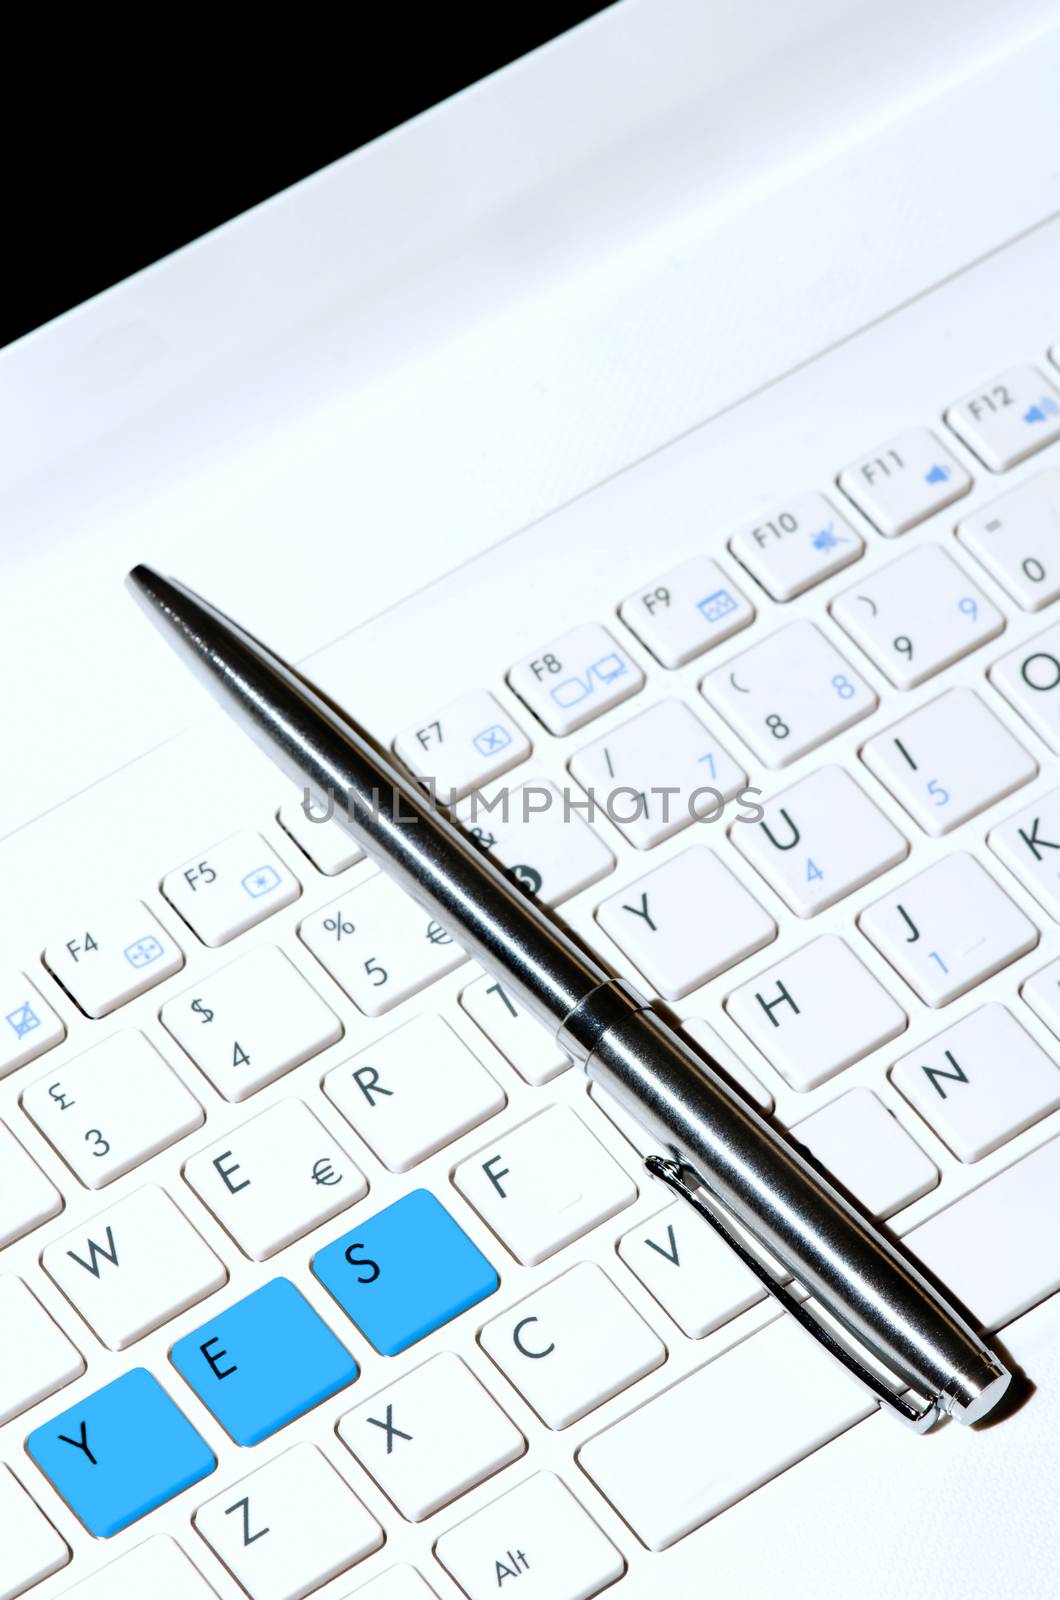 Keyboard with pen by richpav